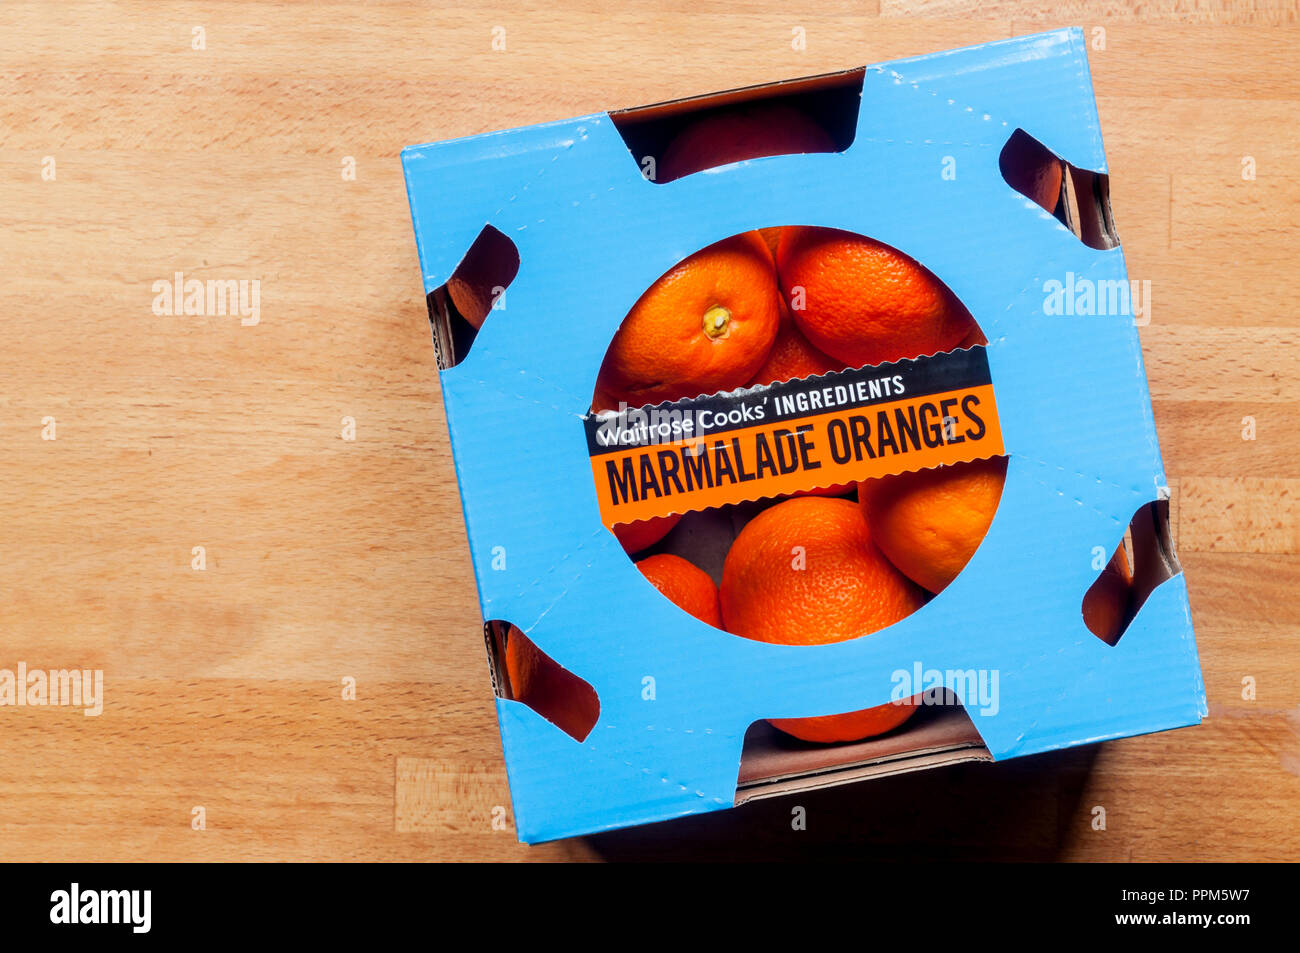 A box of Waitrose Marmalade Oranges. Stock Photo